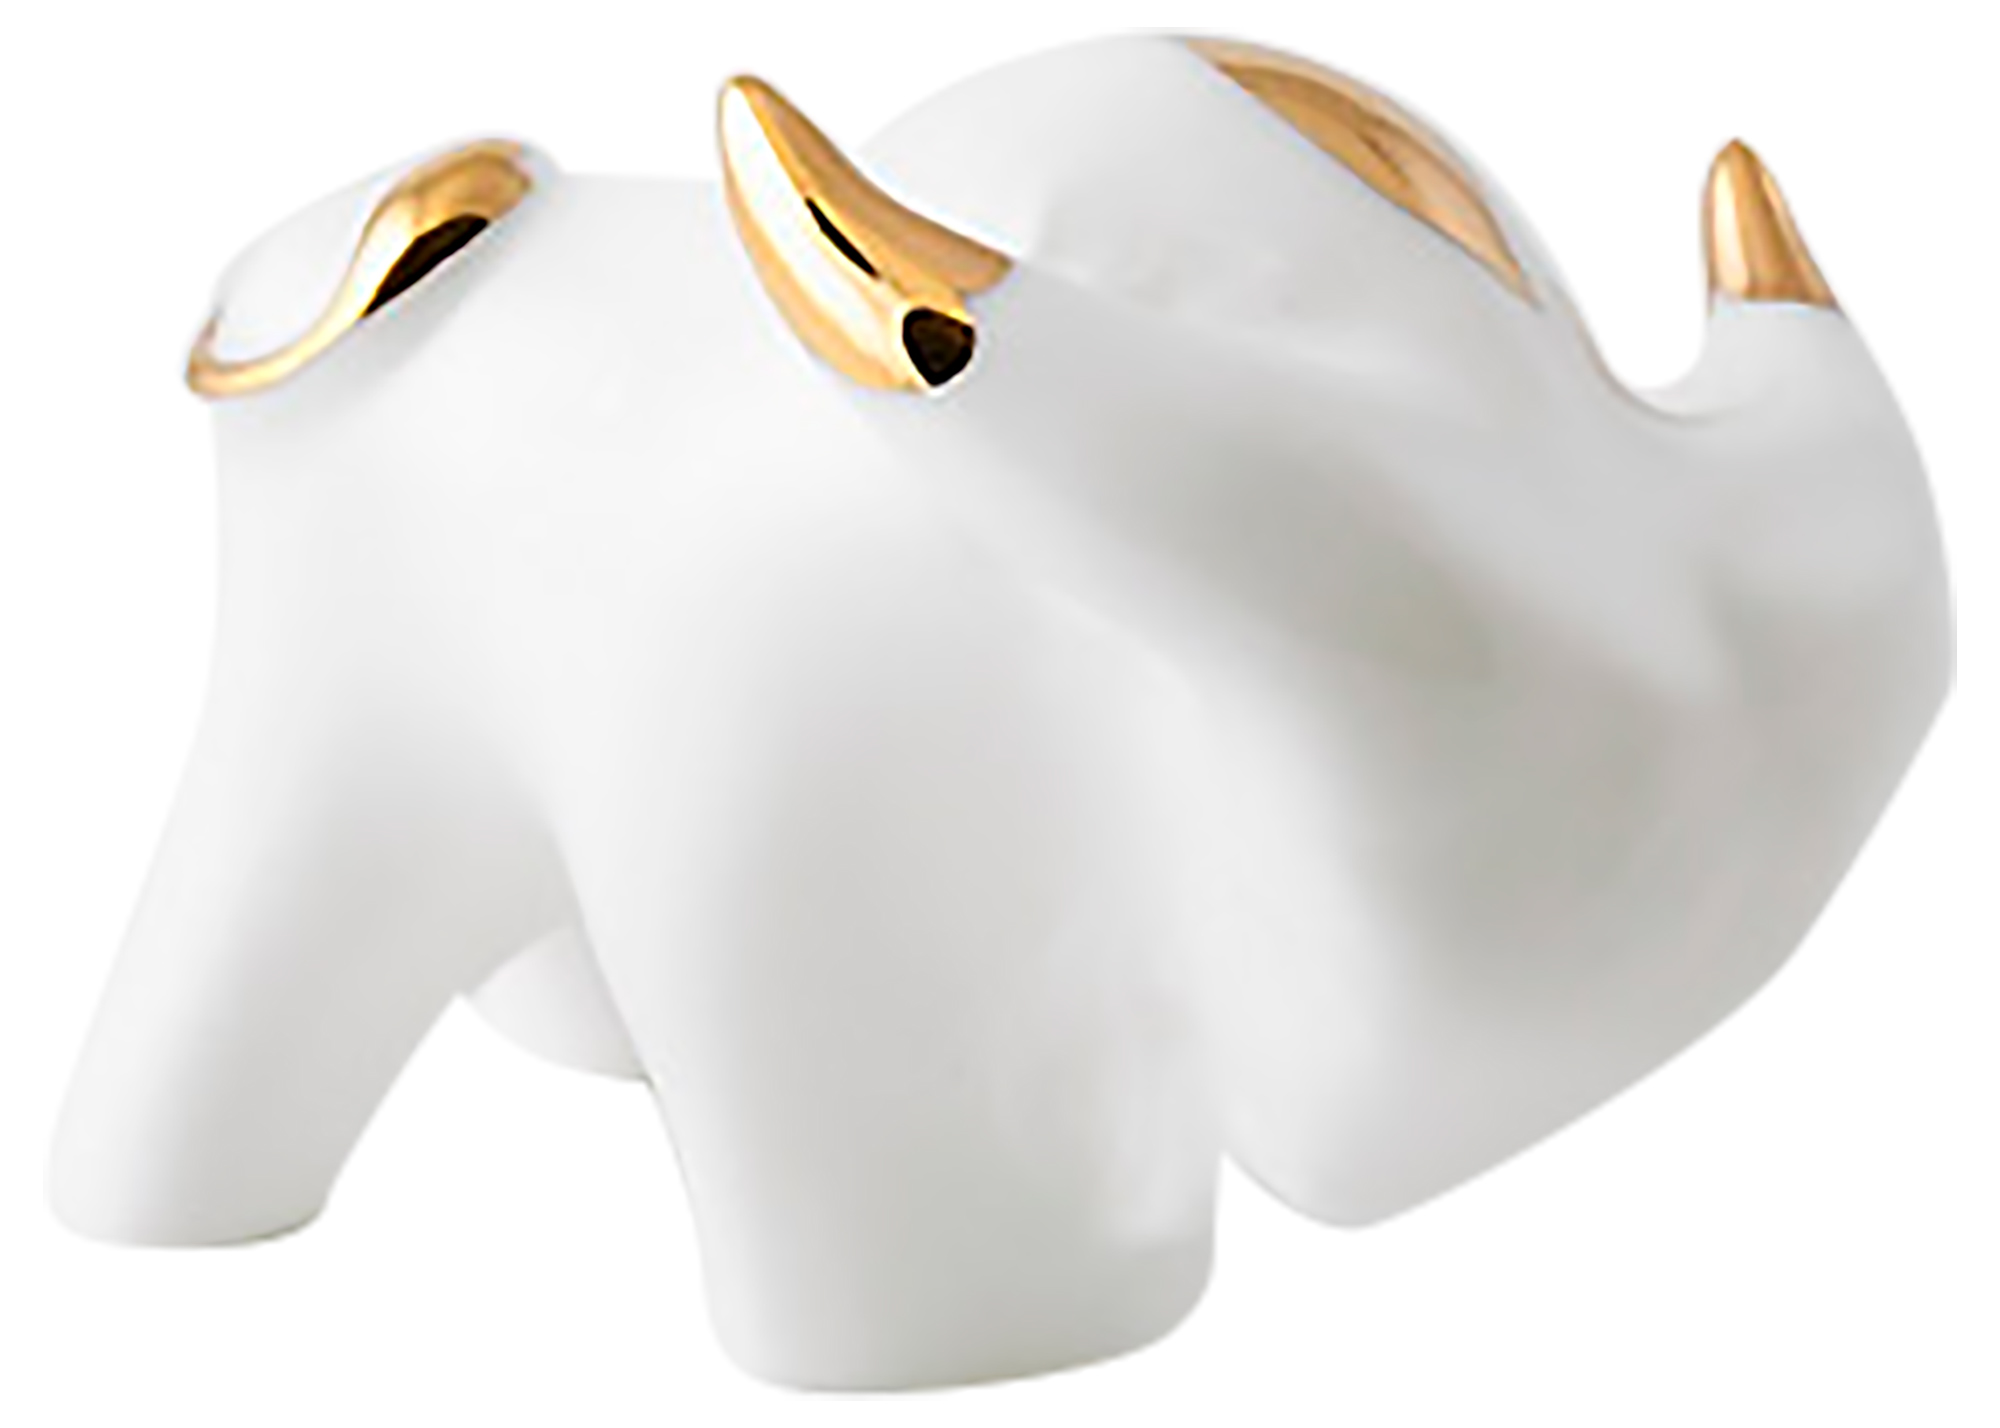 Buy Chinese Zodiac Ox Gift at GoldenCockerel.com